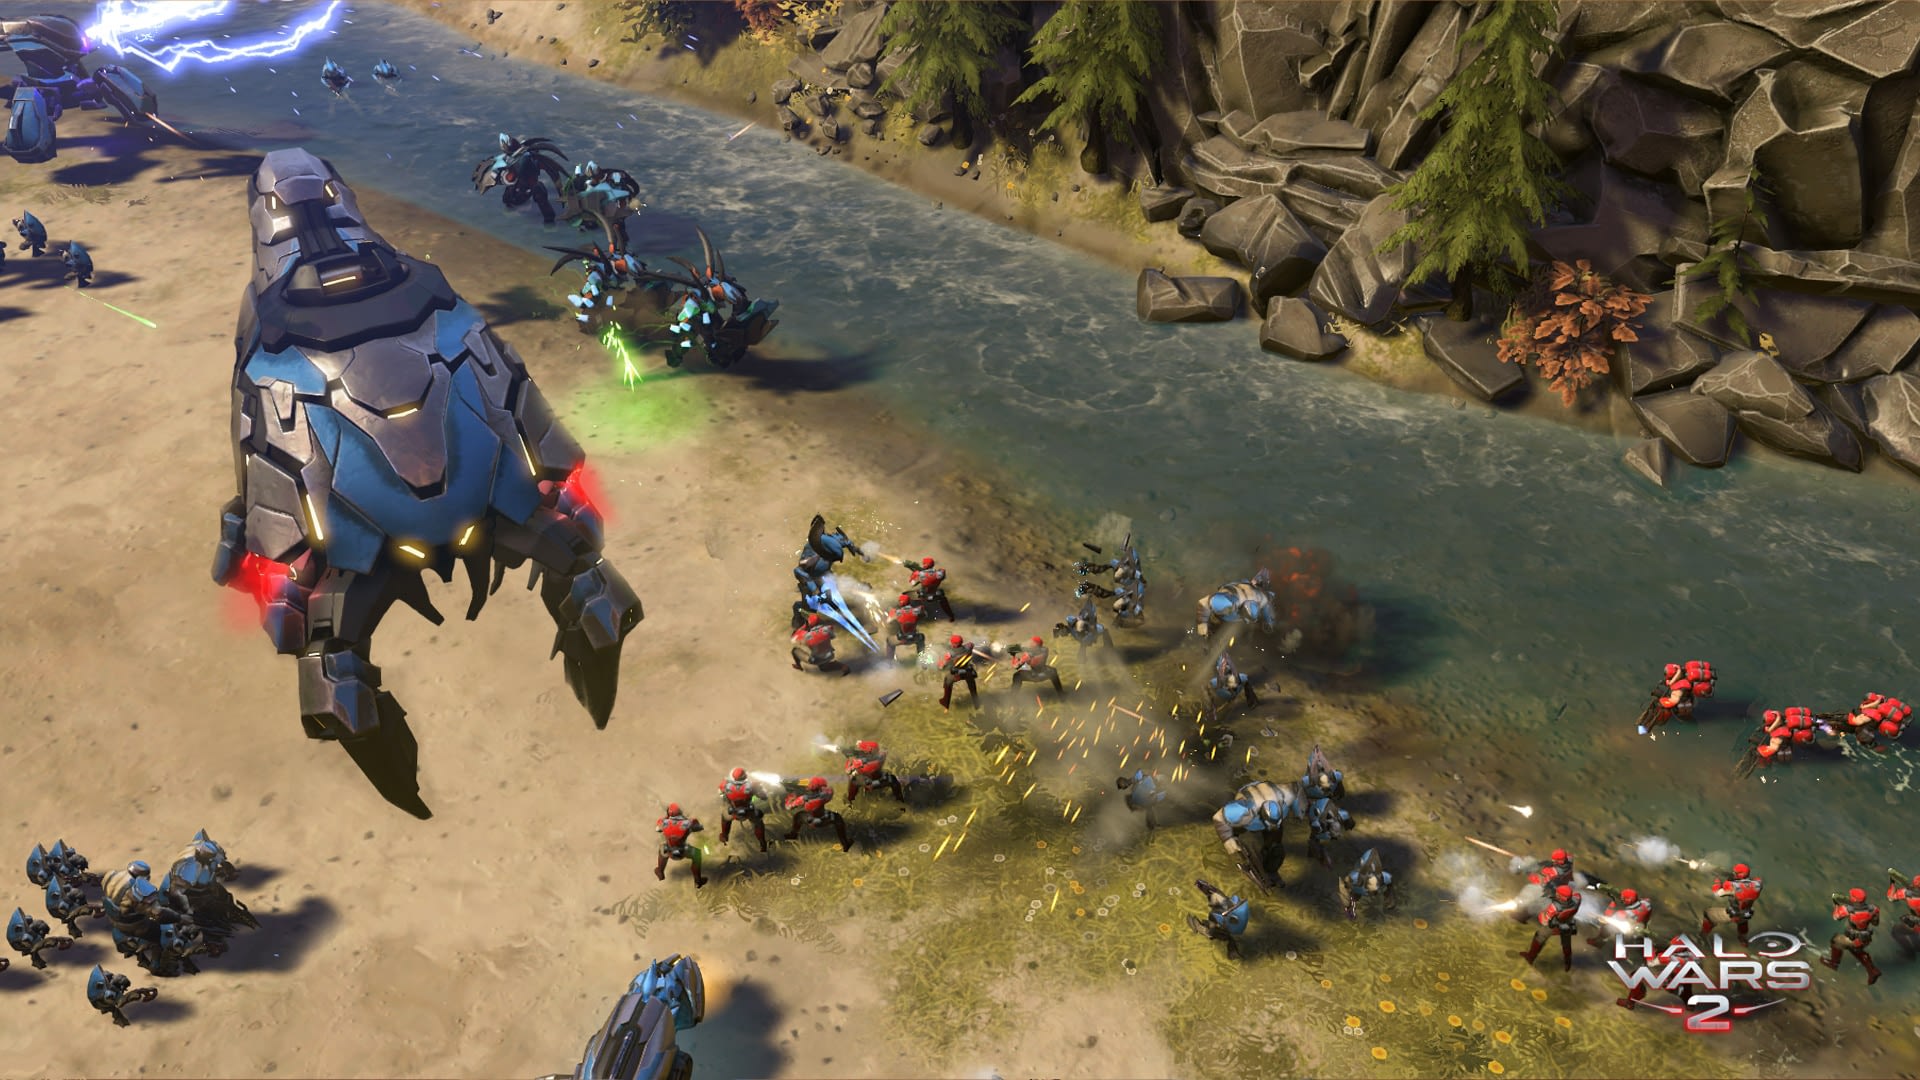 Interview: Major Nelson talks Halo Wars 2, E3 and Project Scorpio